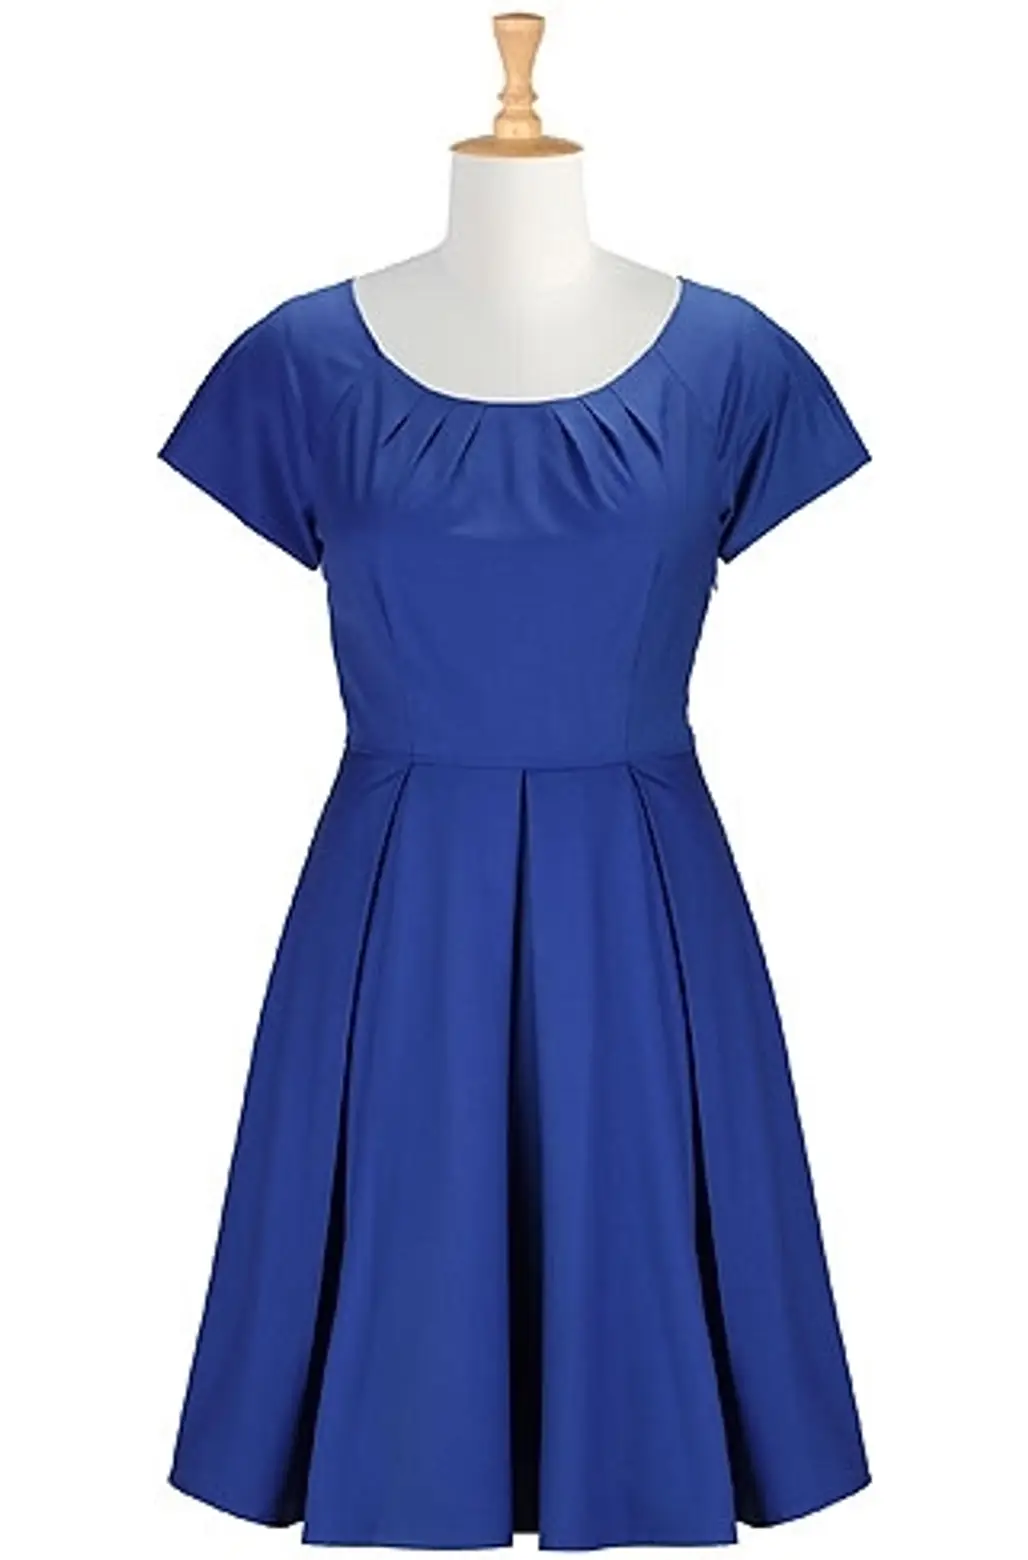 EShakti Pleat Neck a-Line Dress in Royal Blue